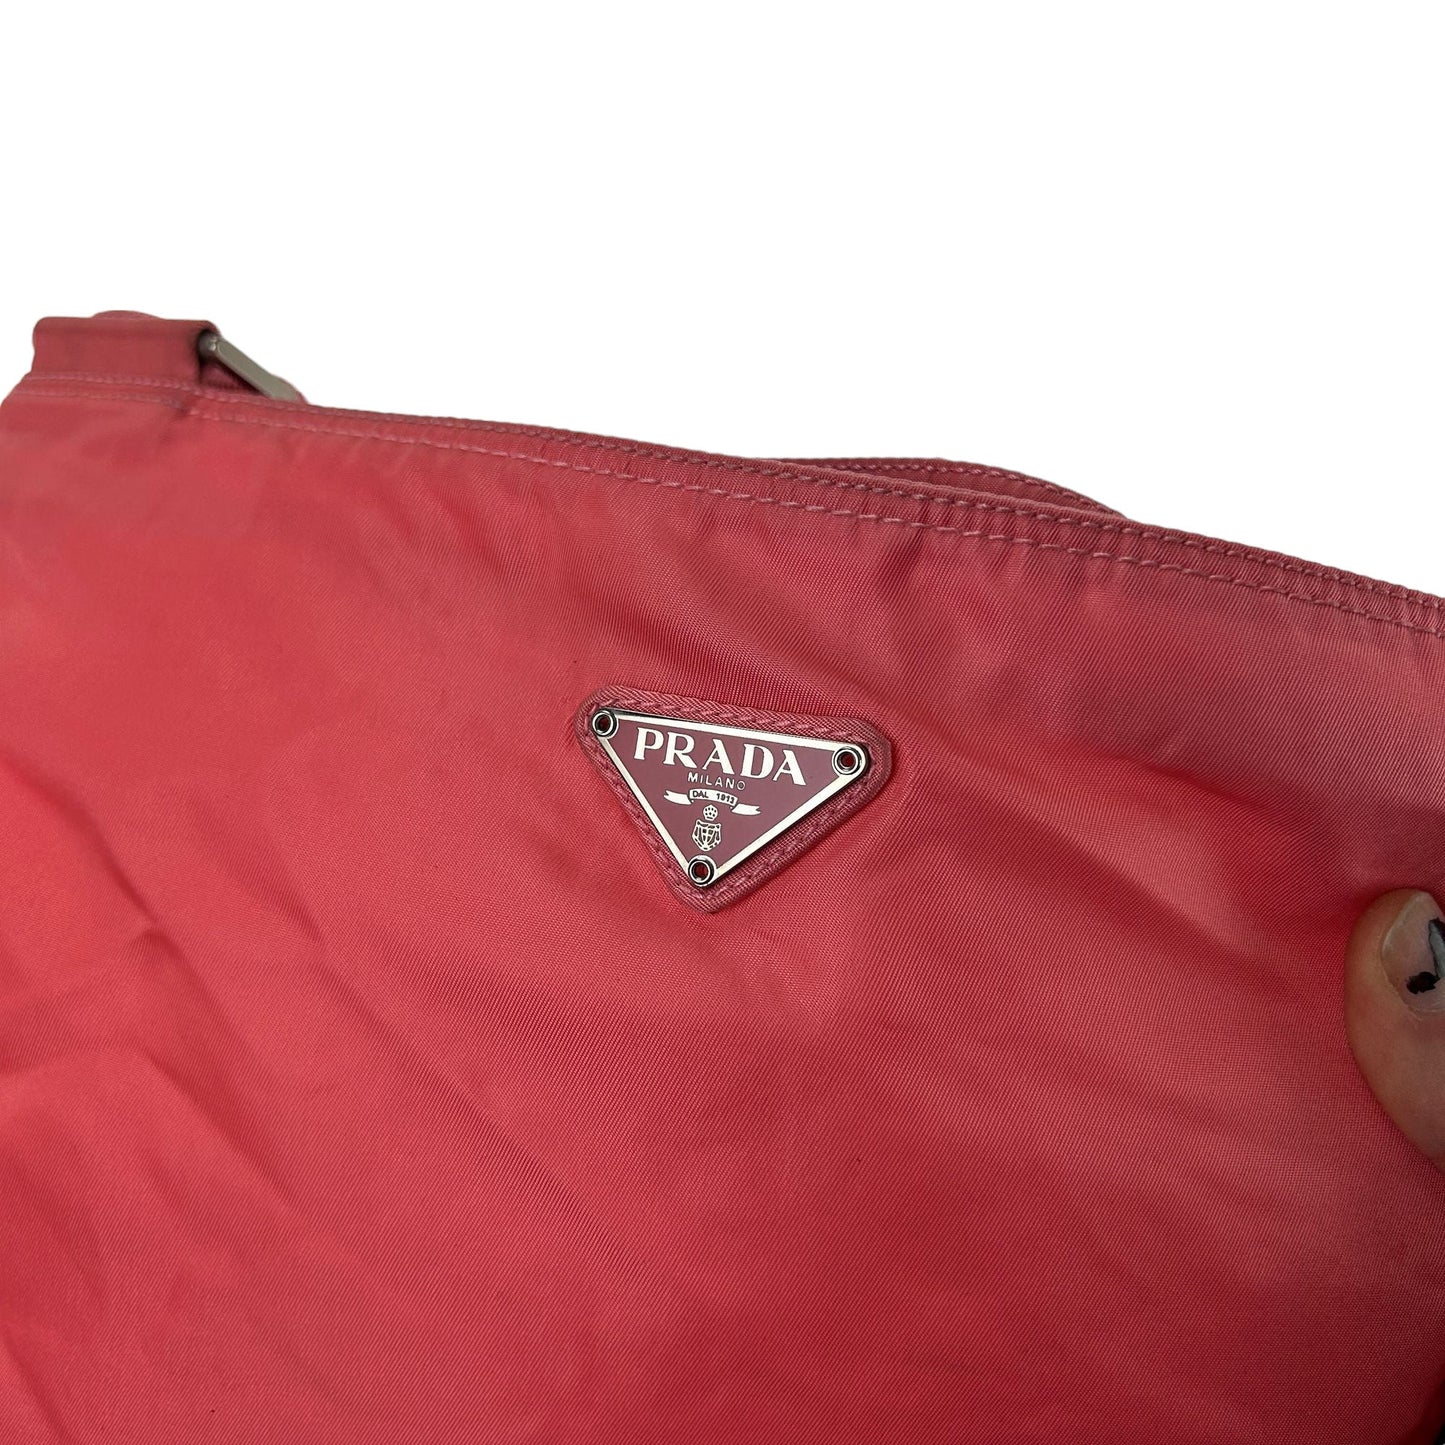 Vintage Prada Nylon Cross Body Bag